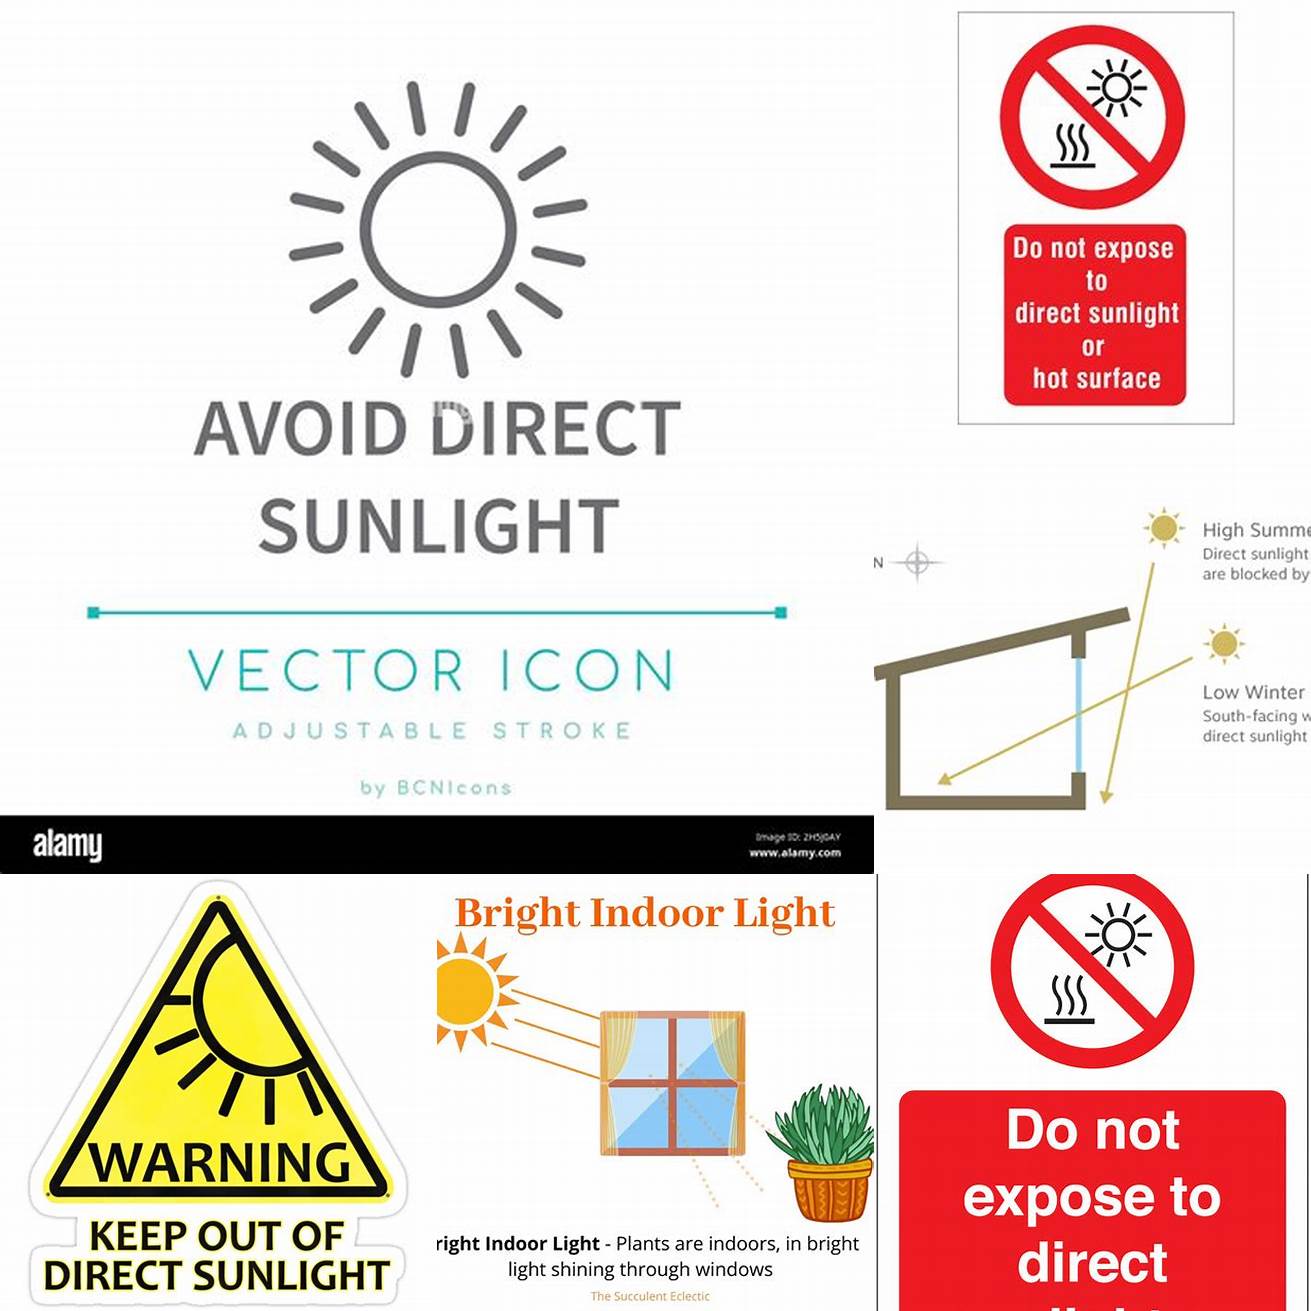 Avoid direct sunlight to prevent fading